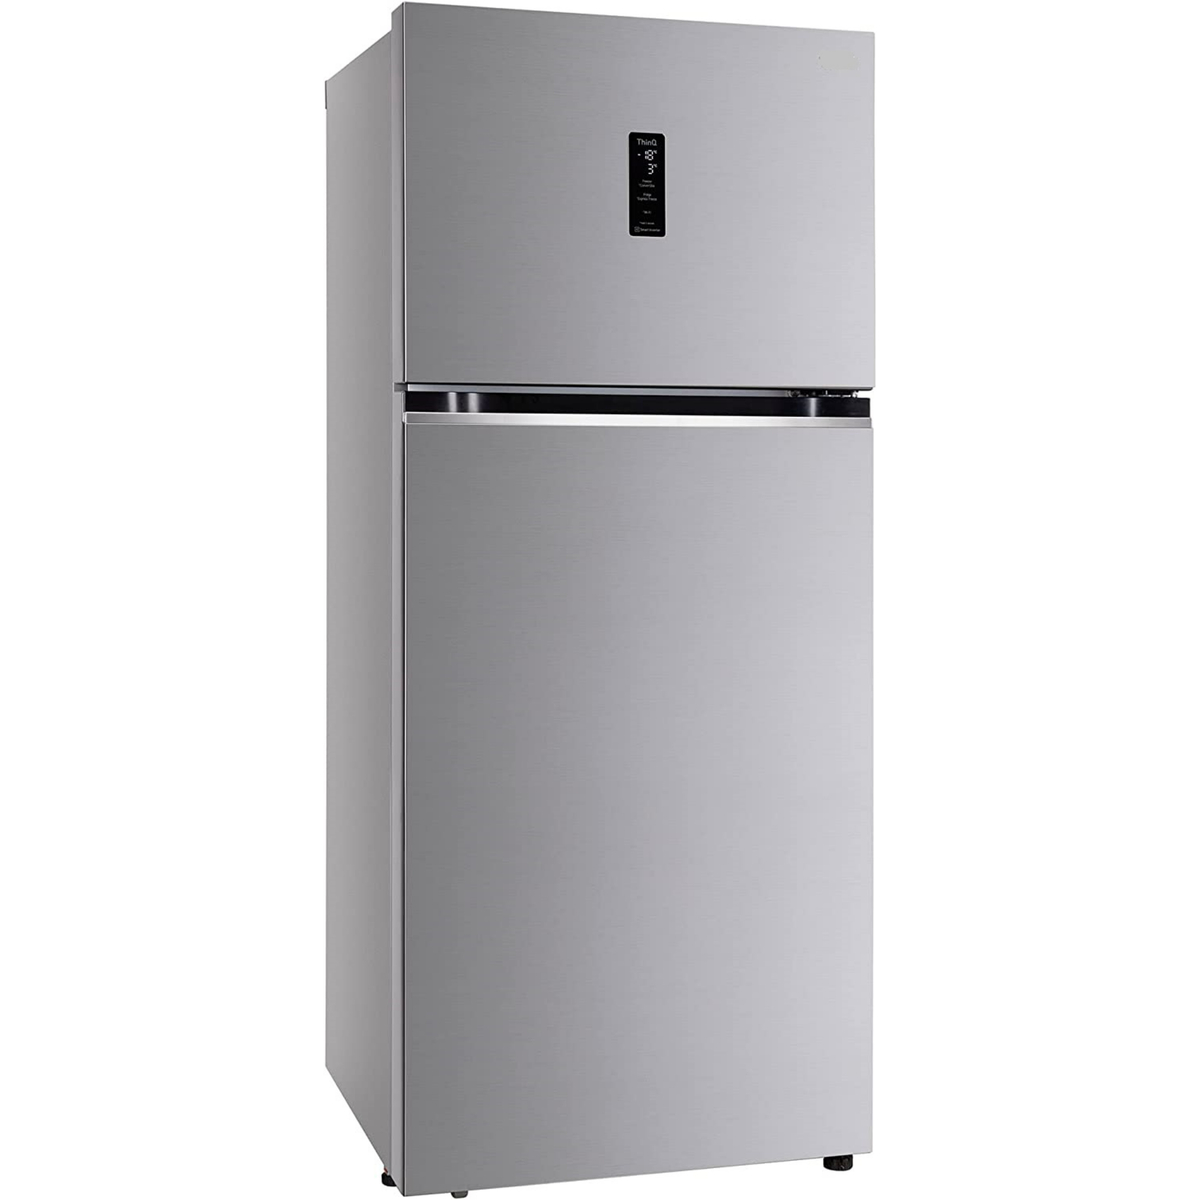 Sharp Double Door Refrigerator, 537 L, Inox Silver, SJ-HM700-HS3